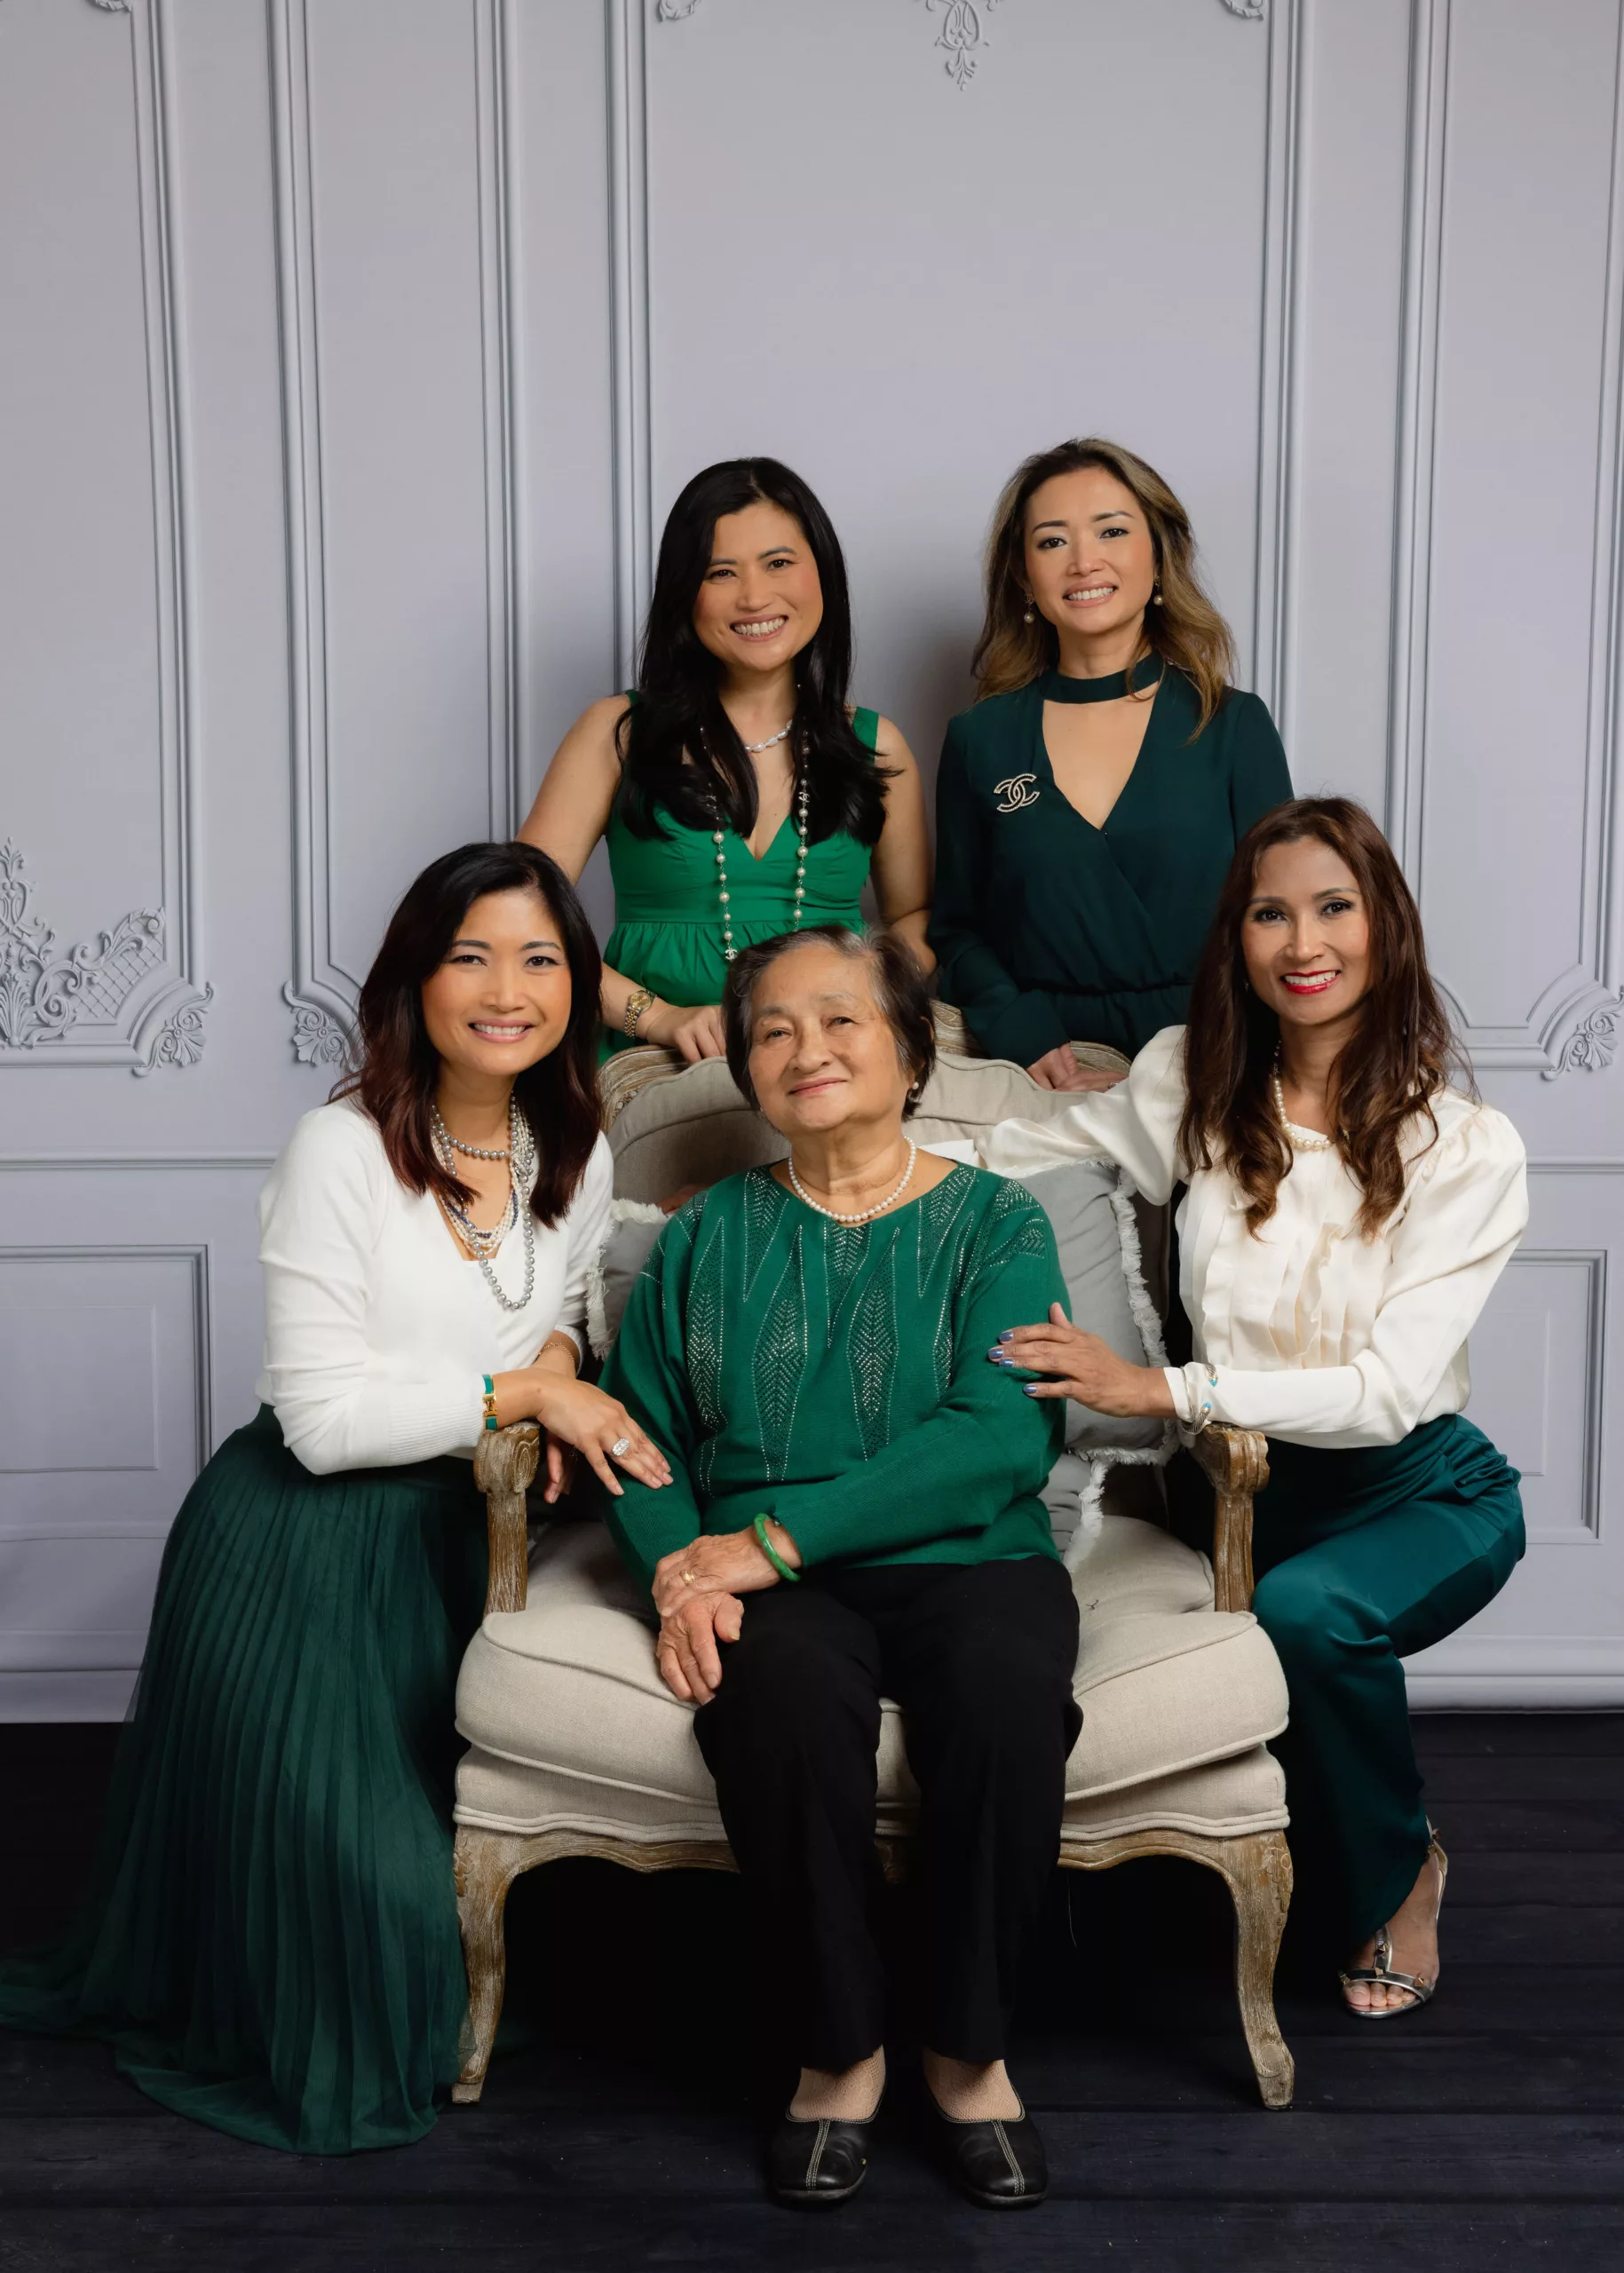 orlando photo studio family photographer studio portraits generations mom with grown daughters green black cream color scheme